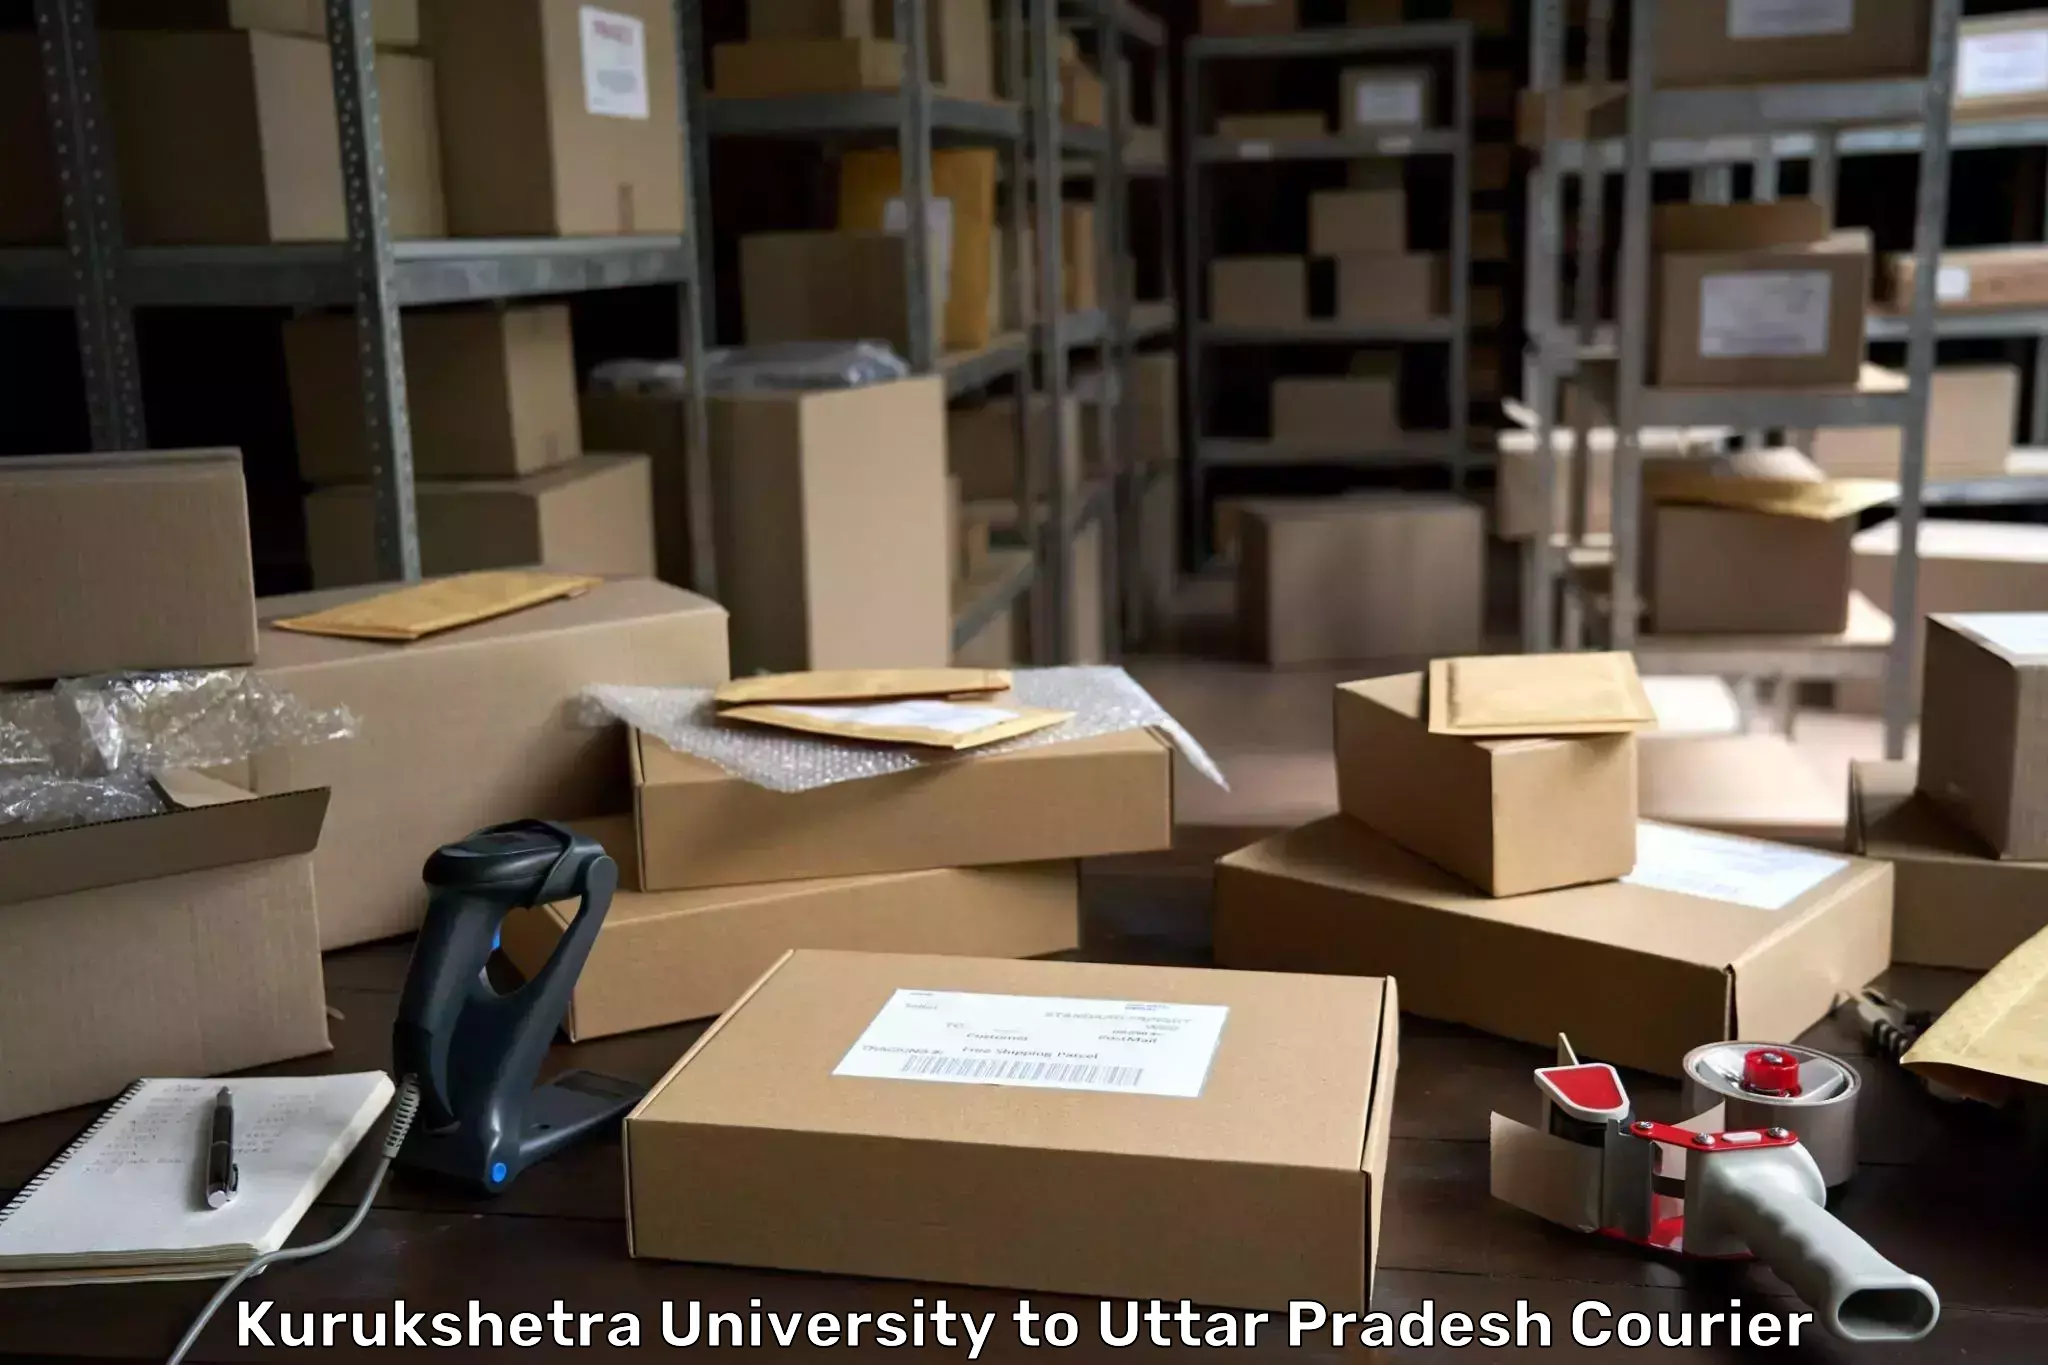 Reliable package handling Kurukshetra University to Noida